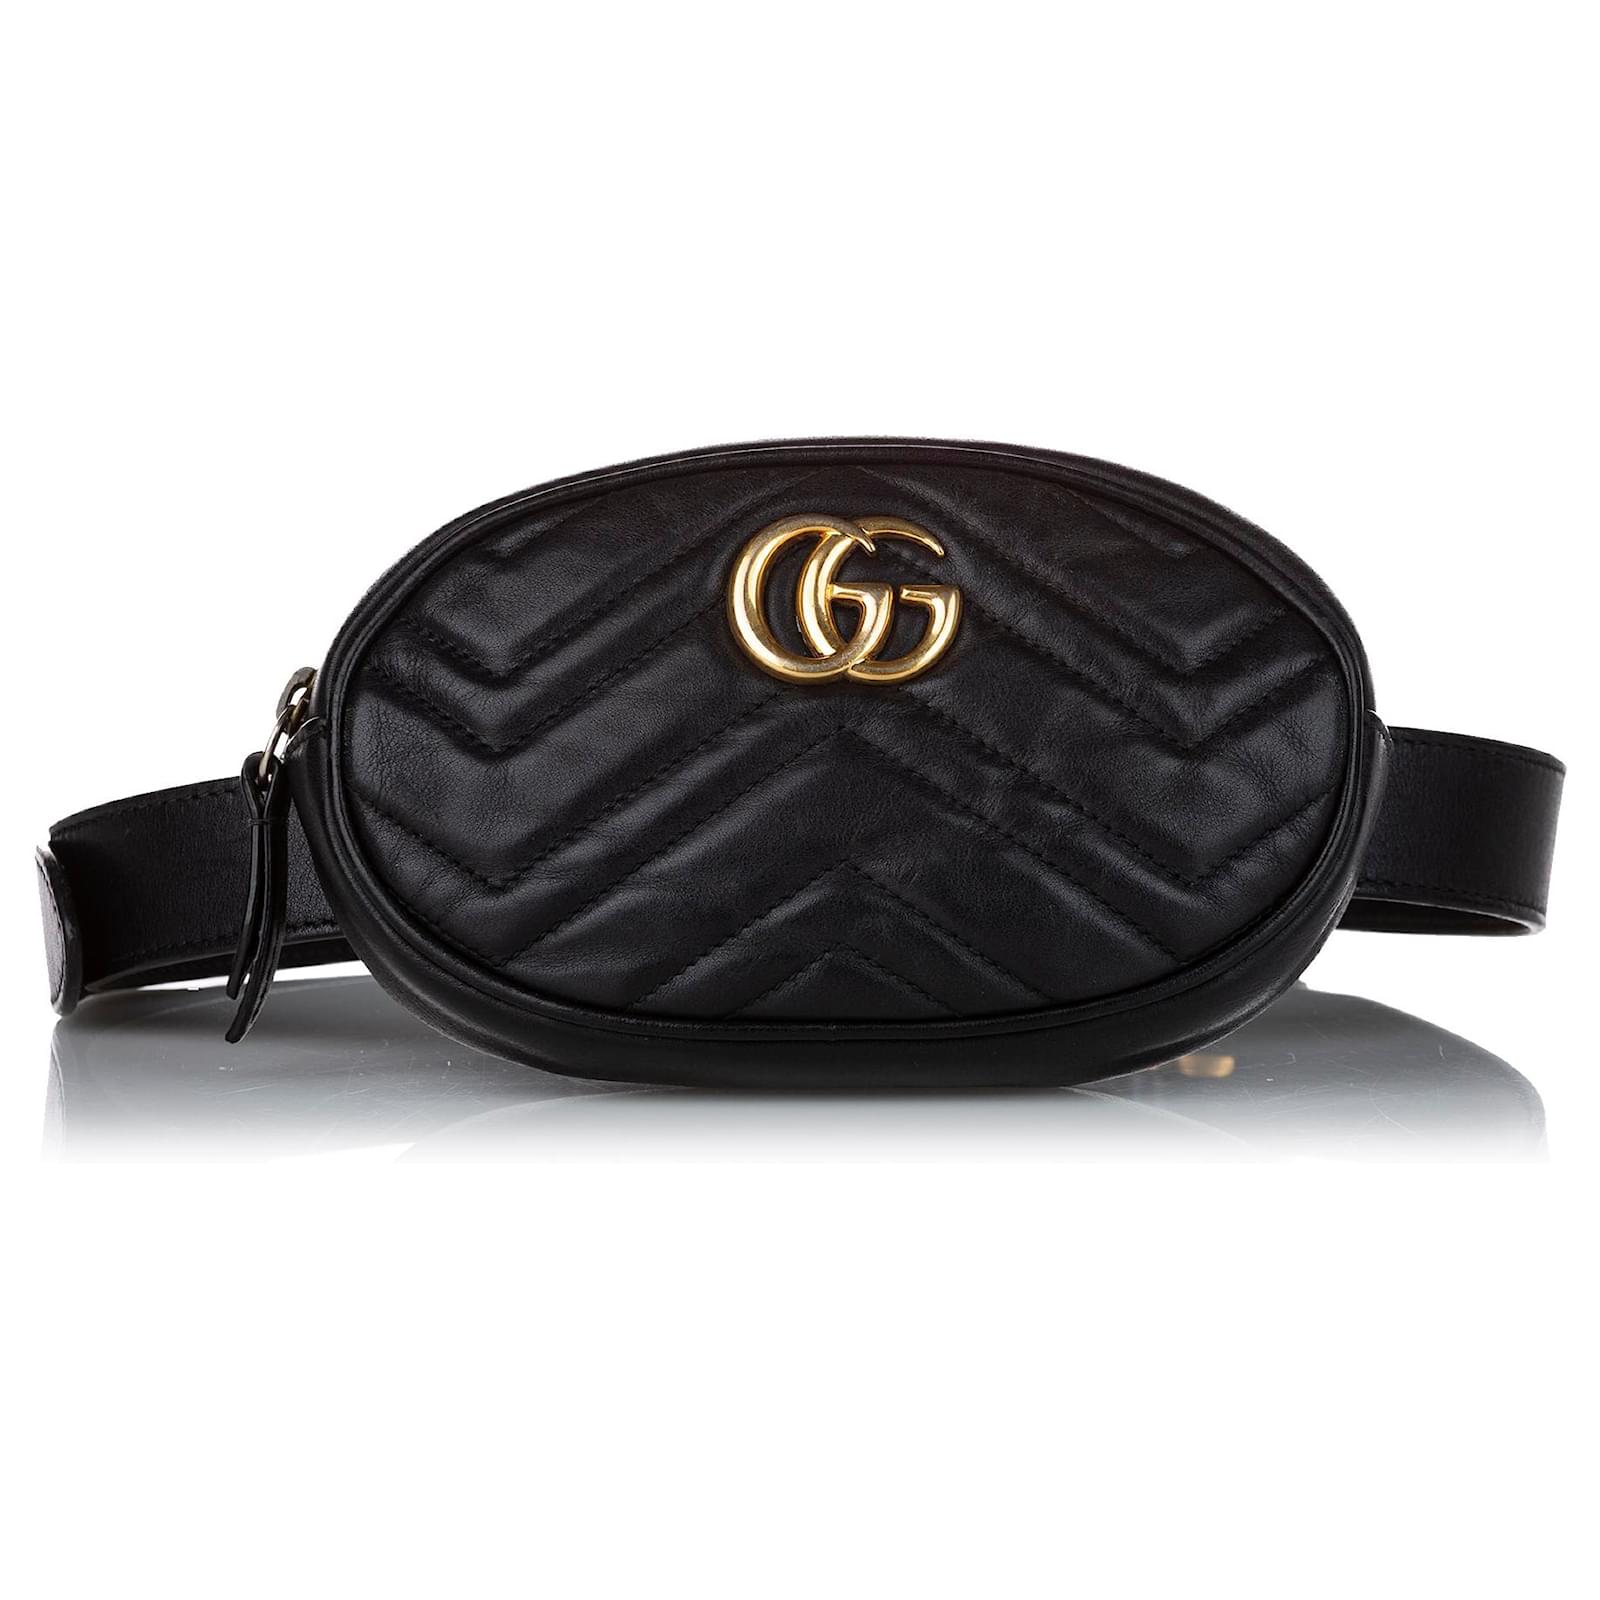 Gucci Black GG Marmont Matelasse Leather Belt Bag Pony-style